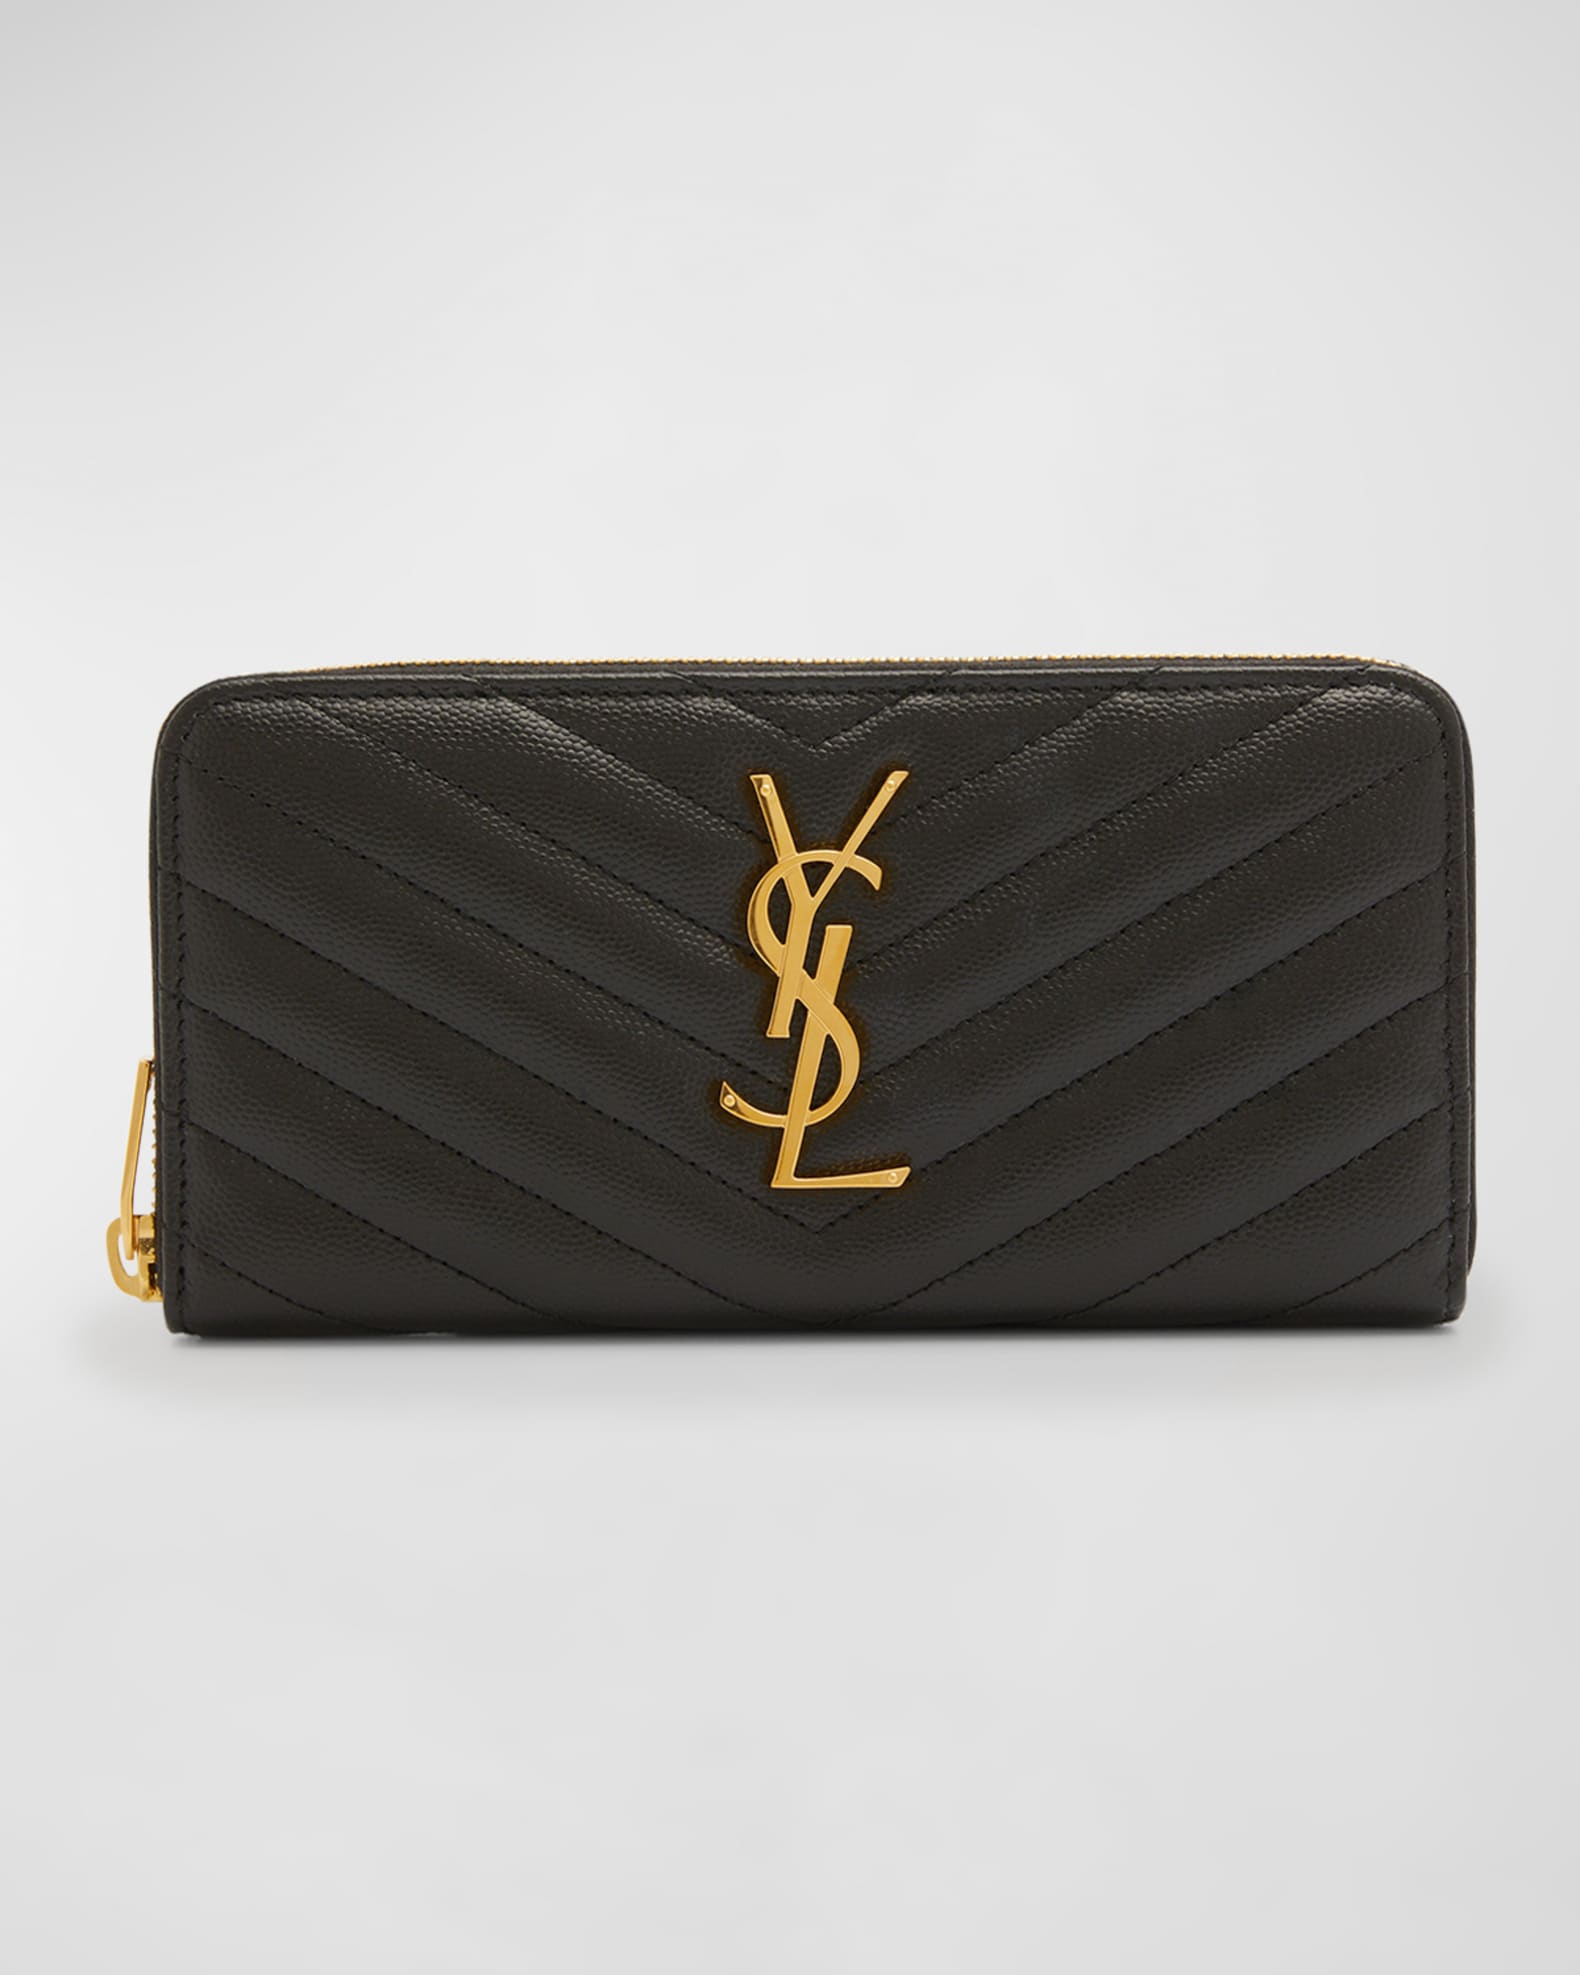 YSL Monogram Large Zip Wallet in Grained Leather | Neiman Marcus